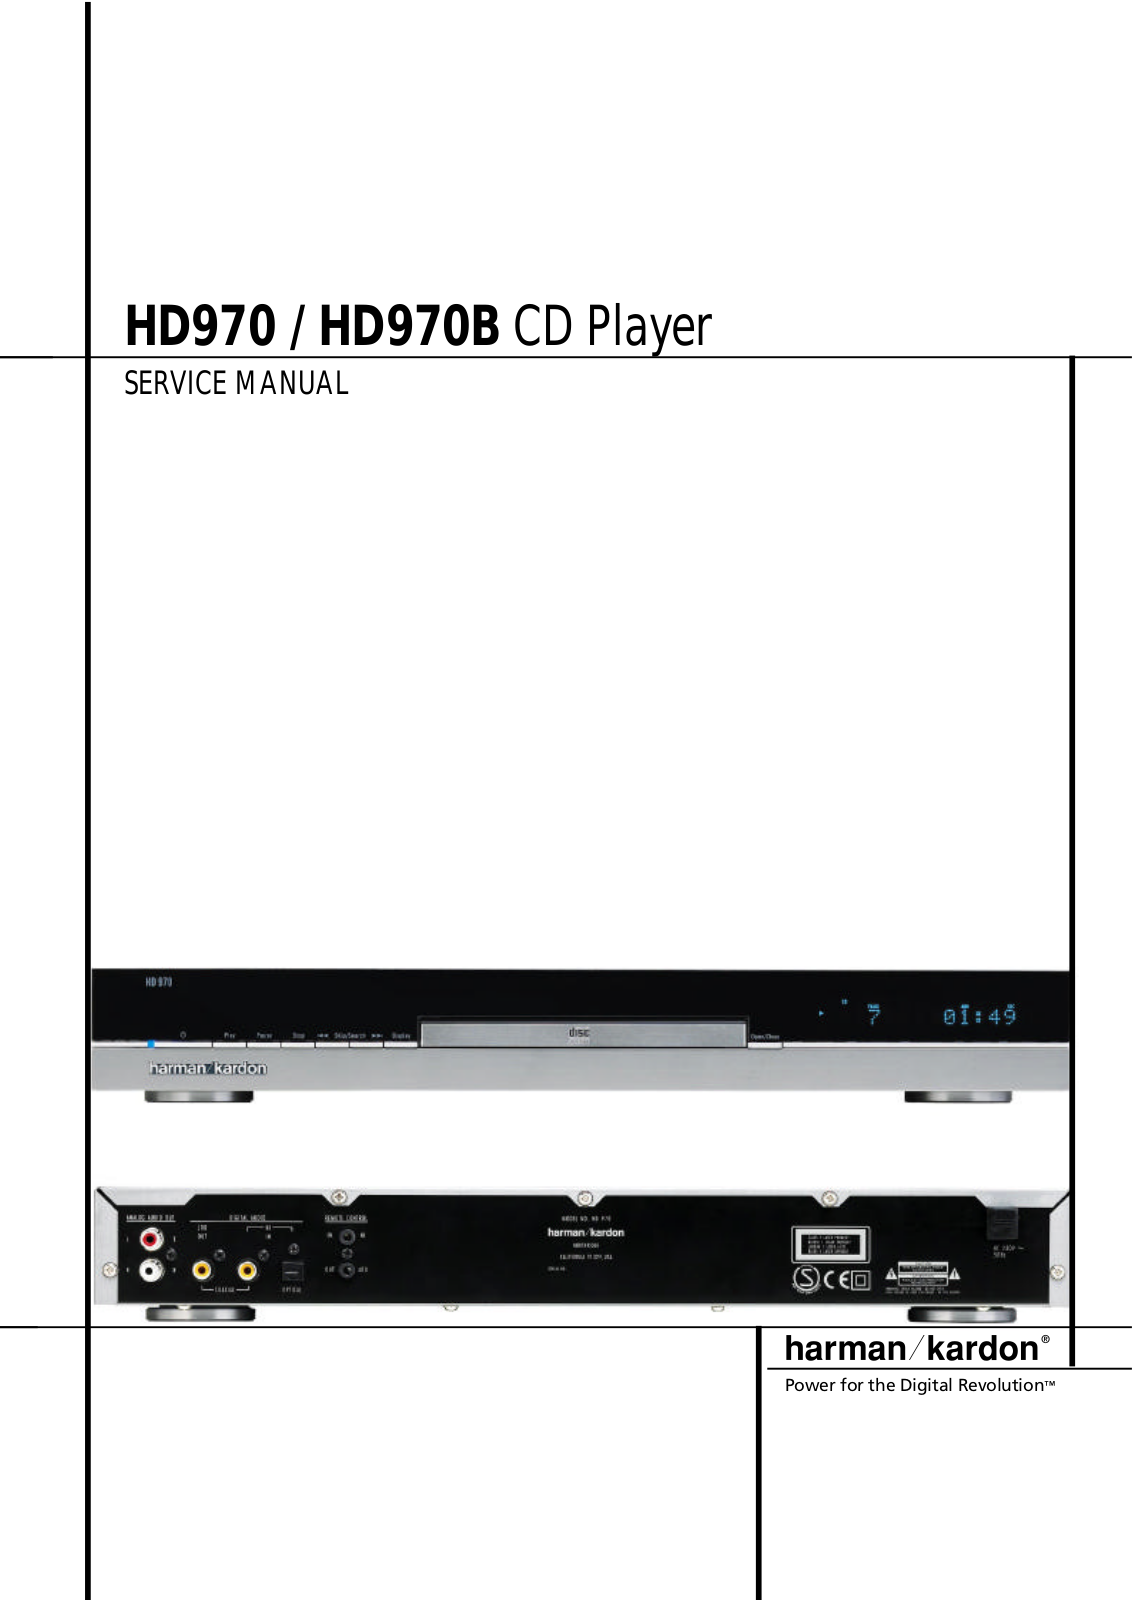 HARMAN KARDON HD970 CD, HD970 71ae Service Manual